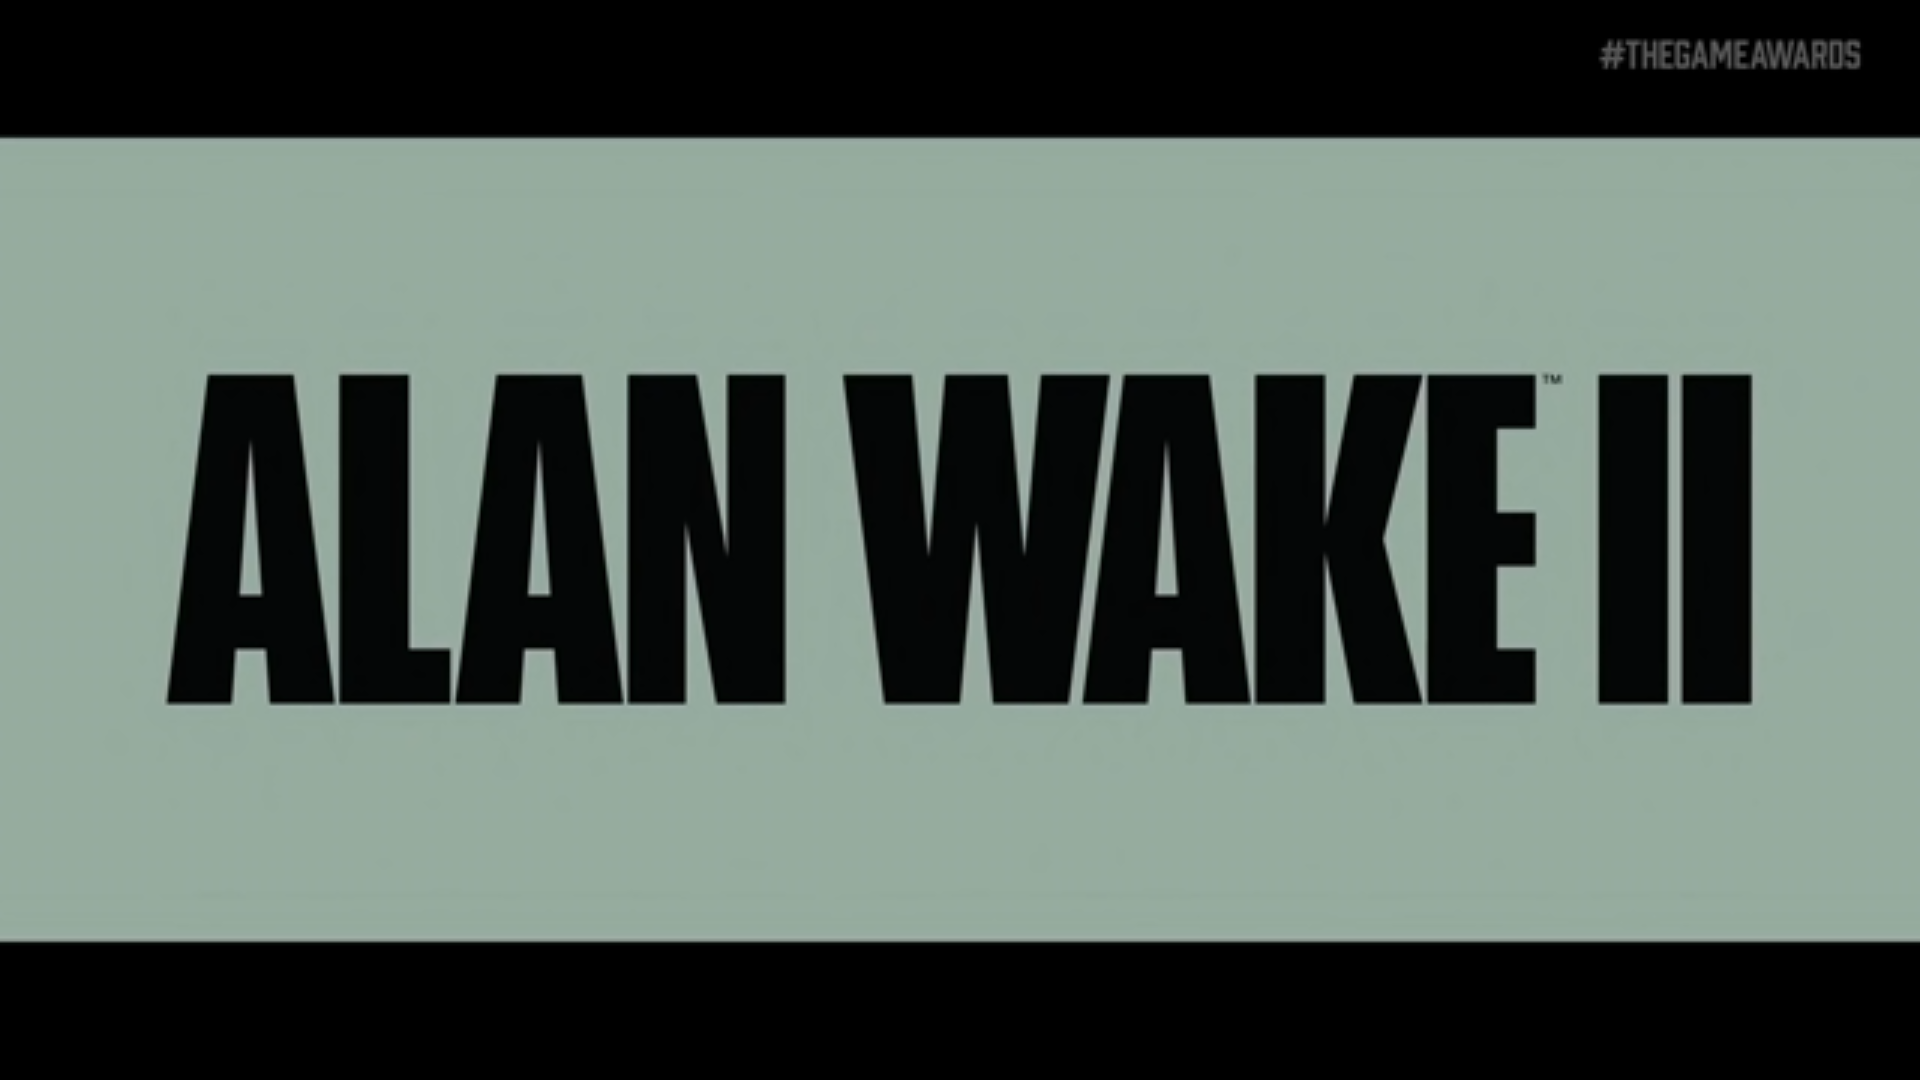 Alan Wake 2 - Release Date Trailer